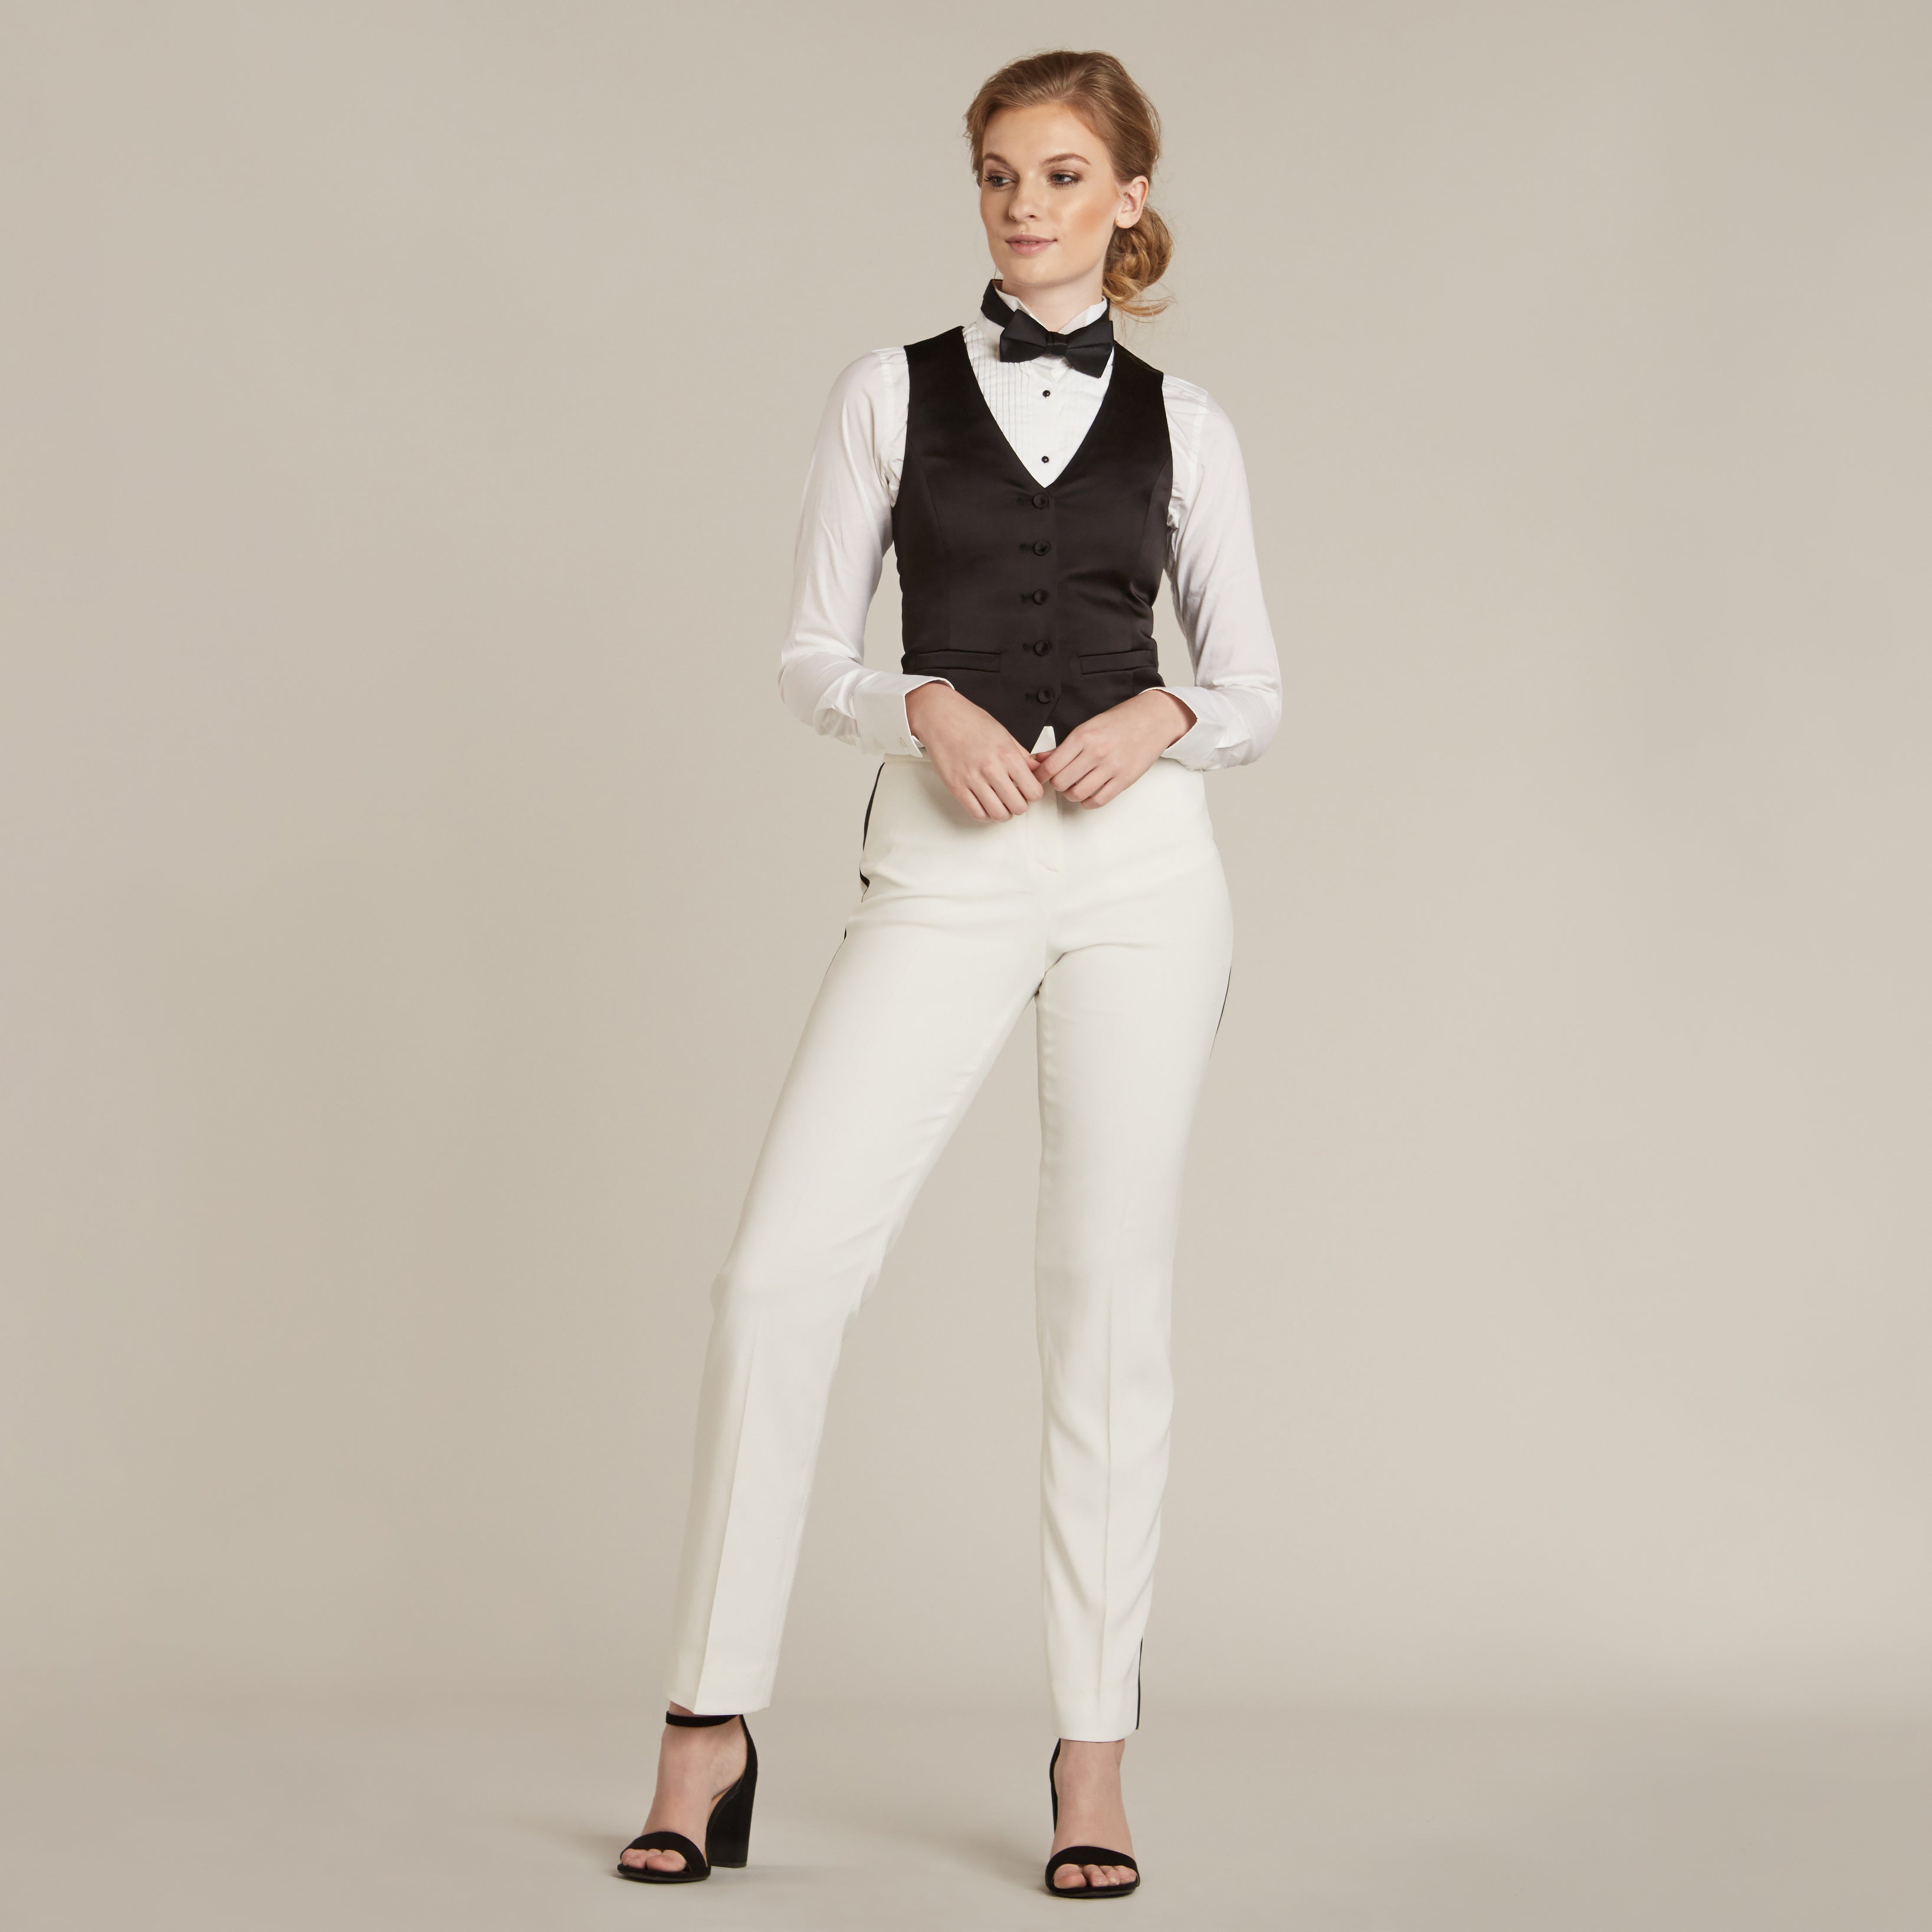 Diamond White & Black Slim Fit Tuxedo Pants - Women’s Tuxedo Suits | girls prom tuxedo | gal tux | Wedding Party, Bridesmaids